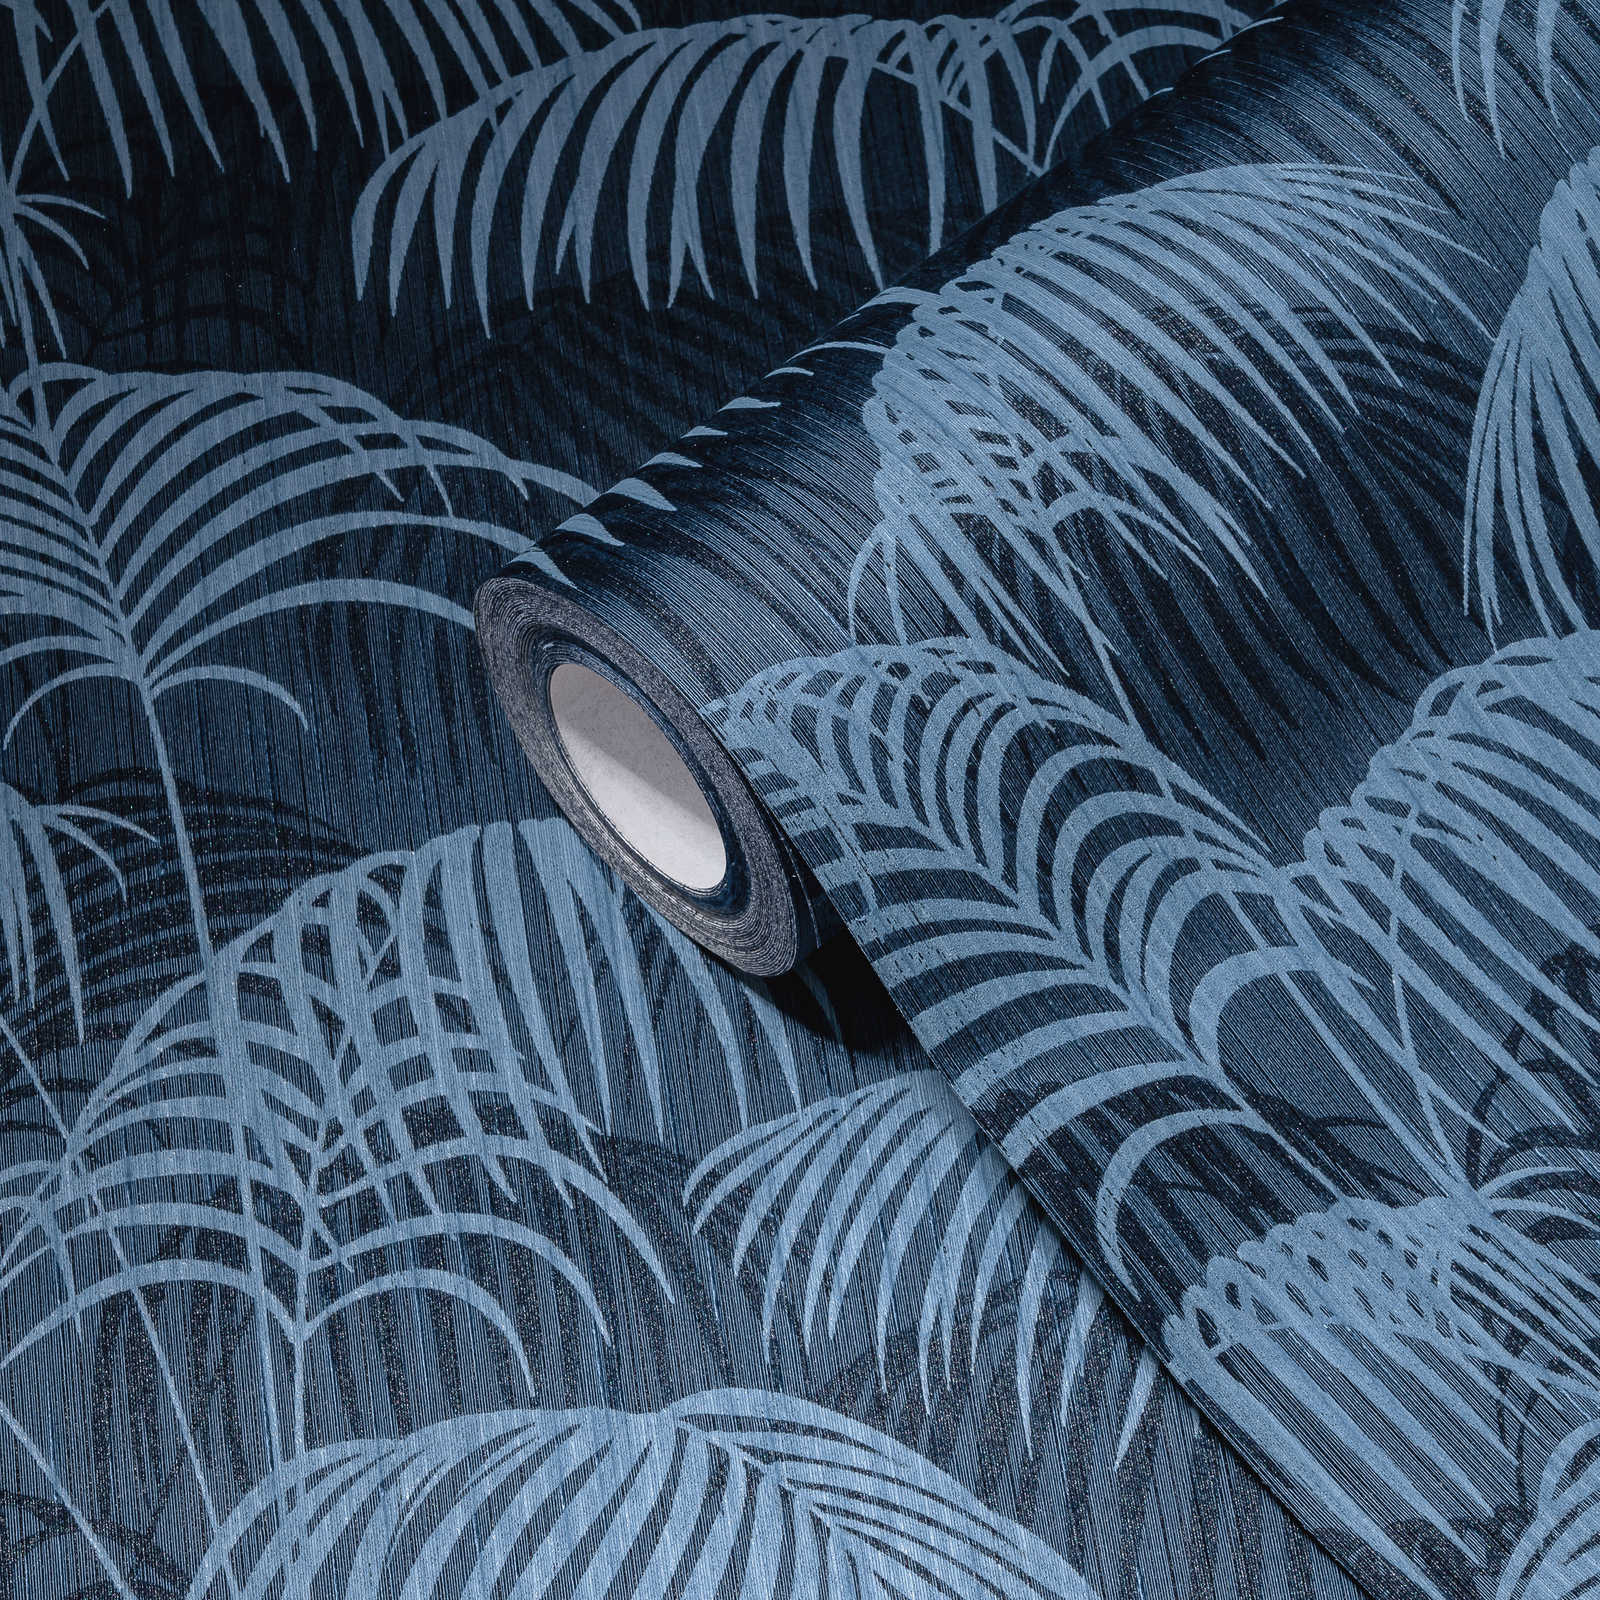             Tapete Dschungel Blätter Muster Kolonial Stil – Blau
        